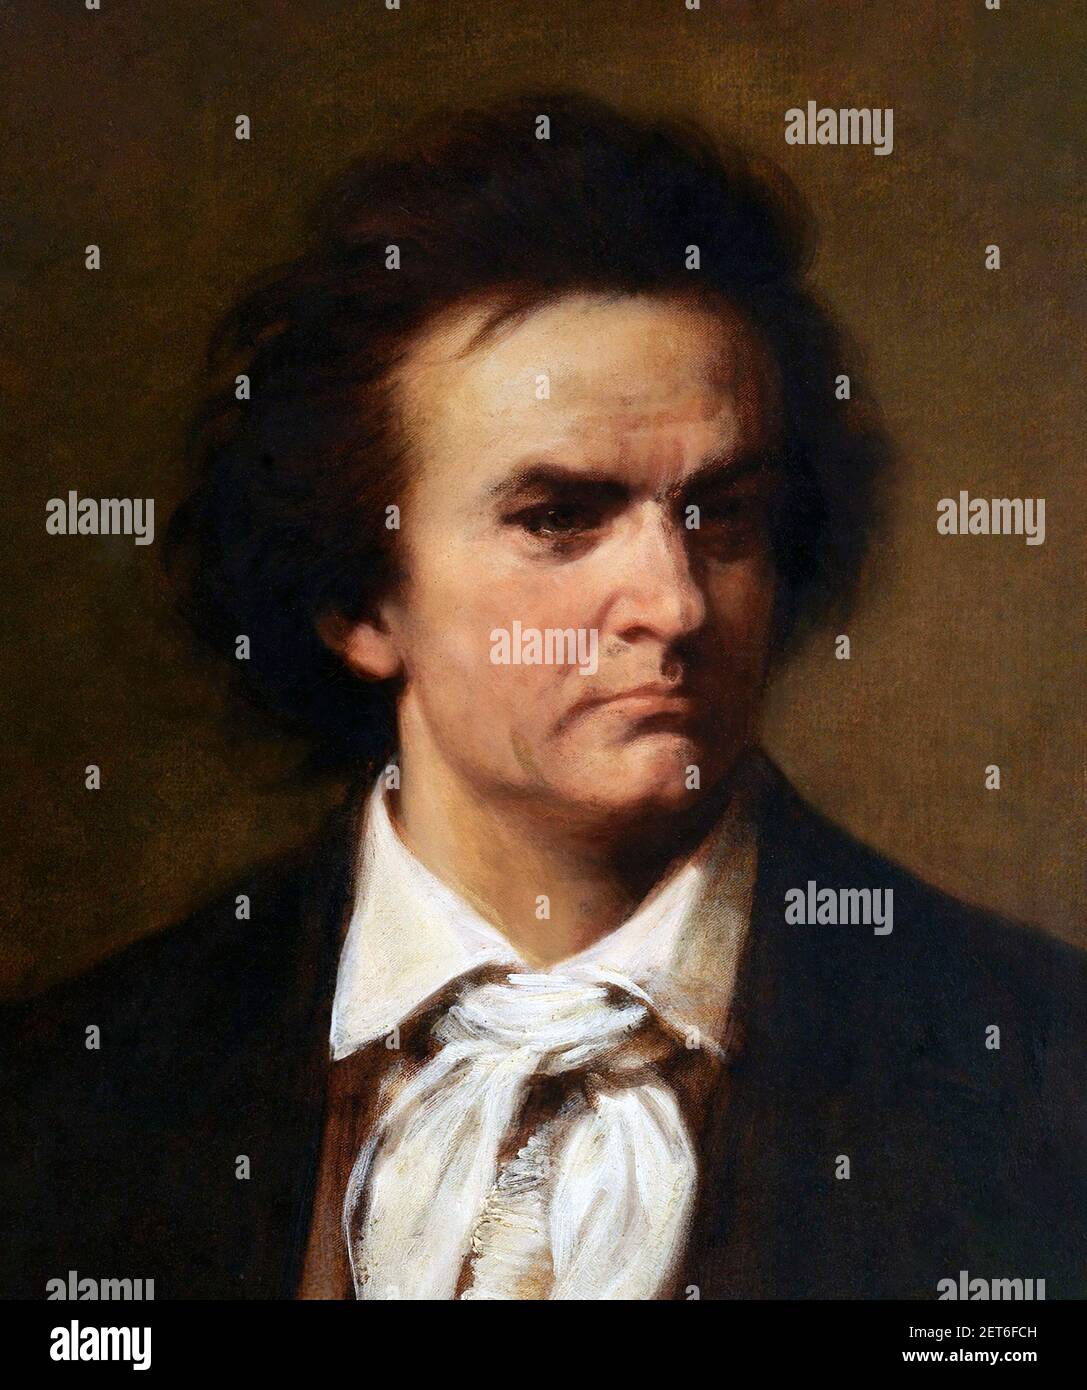 Beethoven; Portrait du compositeur allemand Ludwig van Beethoven (1770-1827) par Henry Ulke, huile sur toile, 1875 Banque D'Images